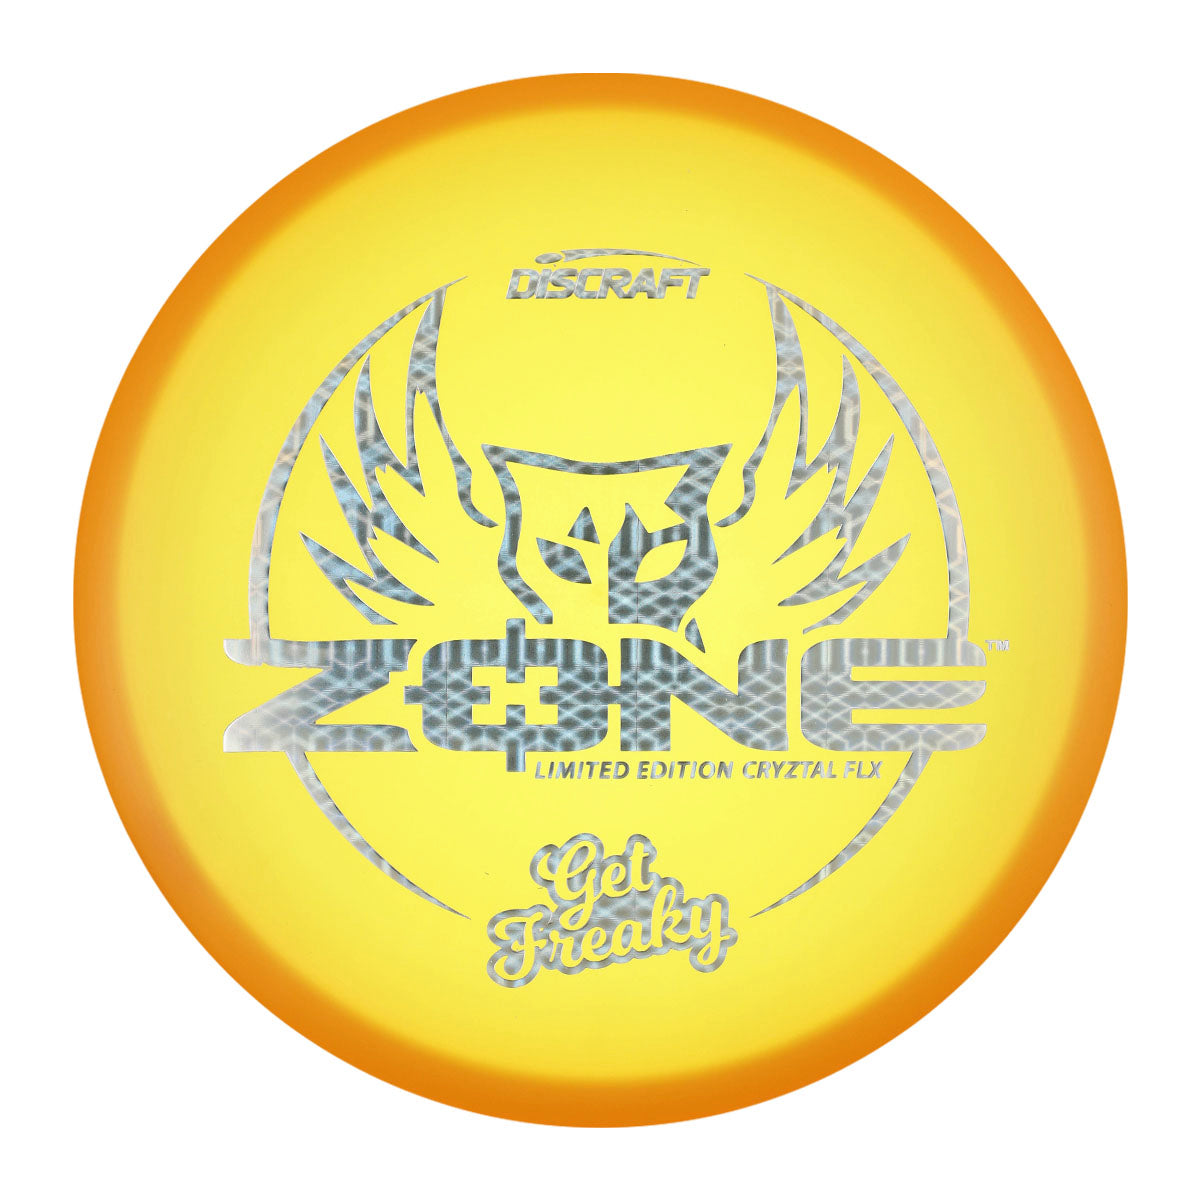 Get Freaky CryZtal Flx Glo Zone Team Discraft Reviews on Judge.me